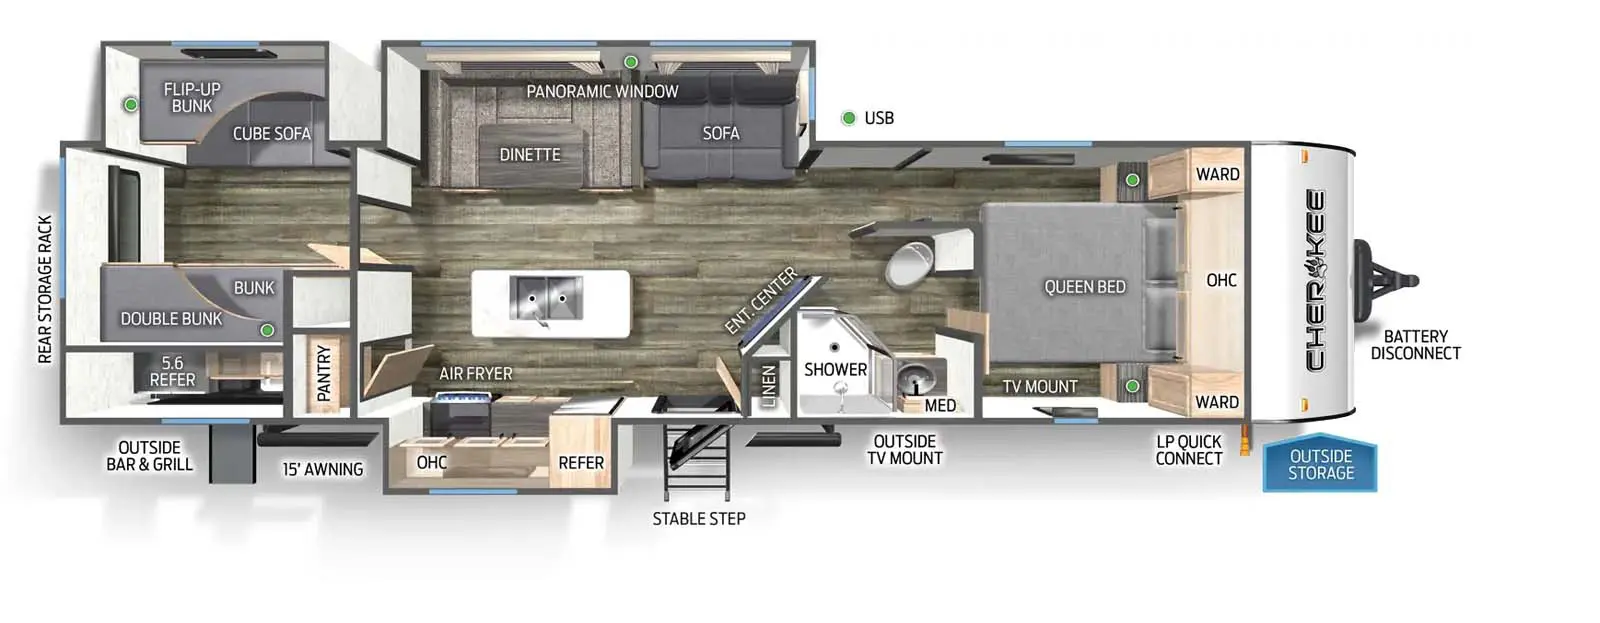 304BH Floorplan Image